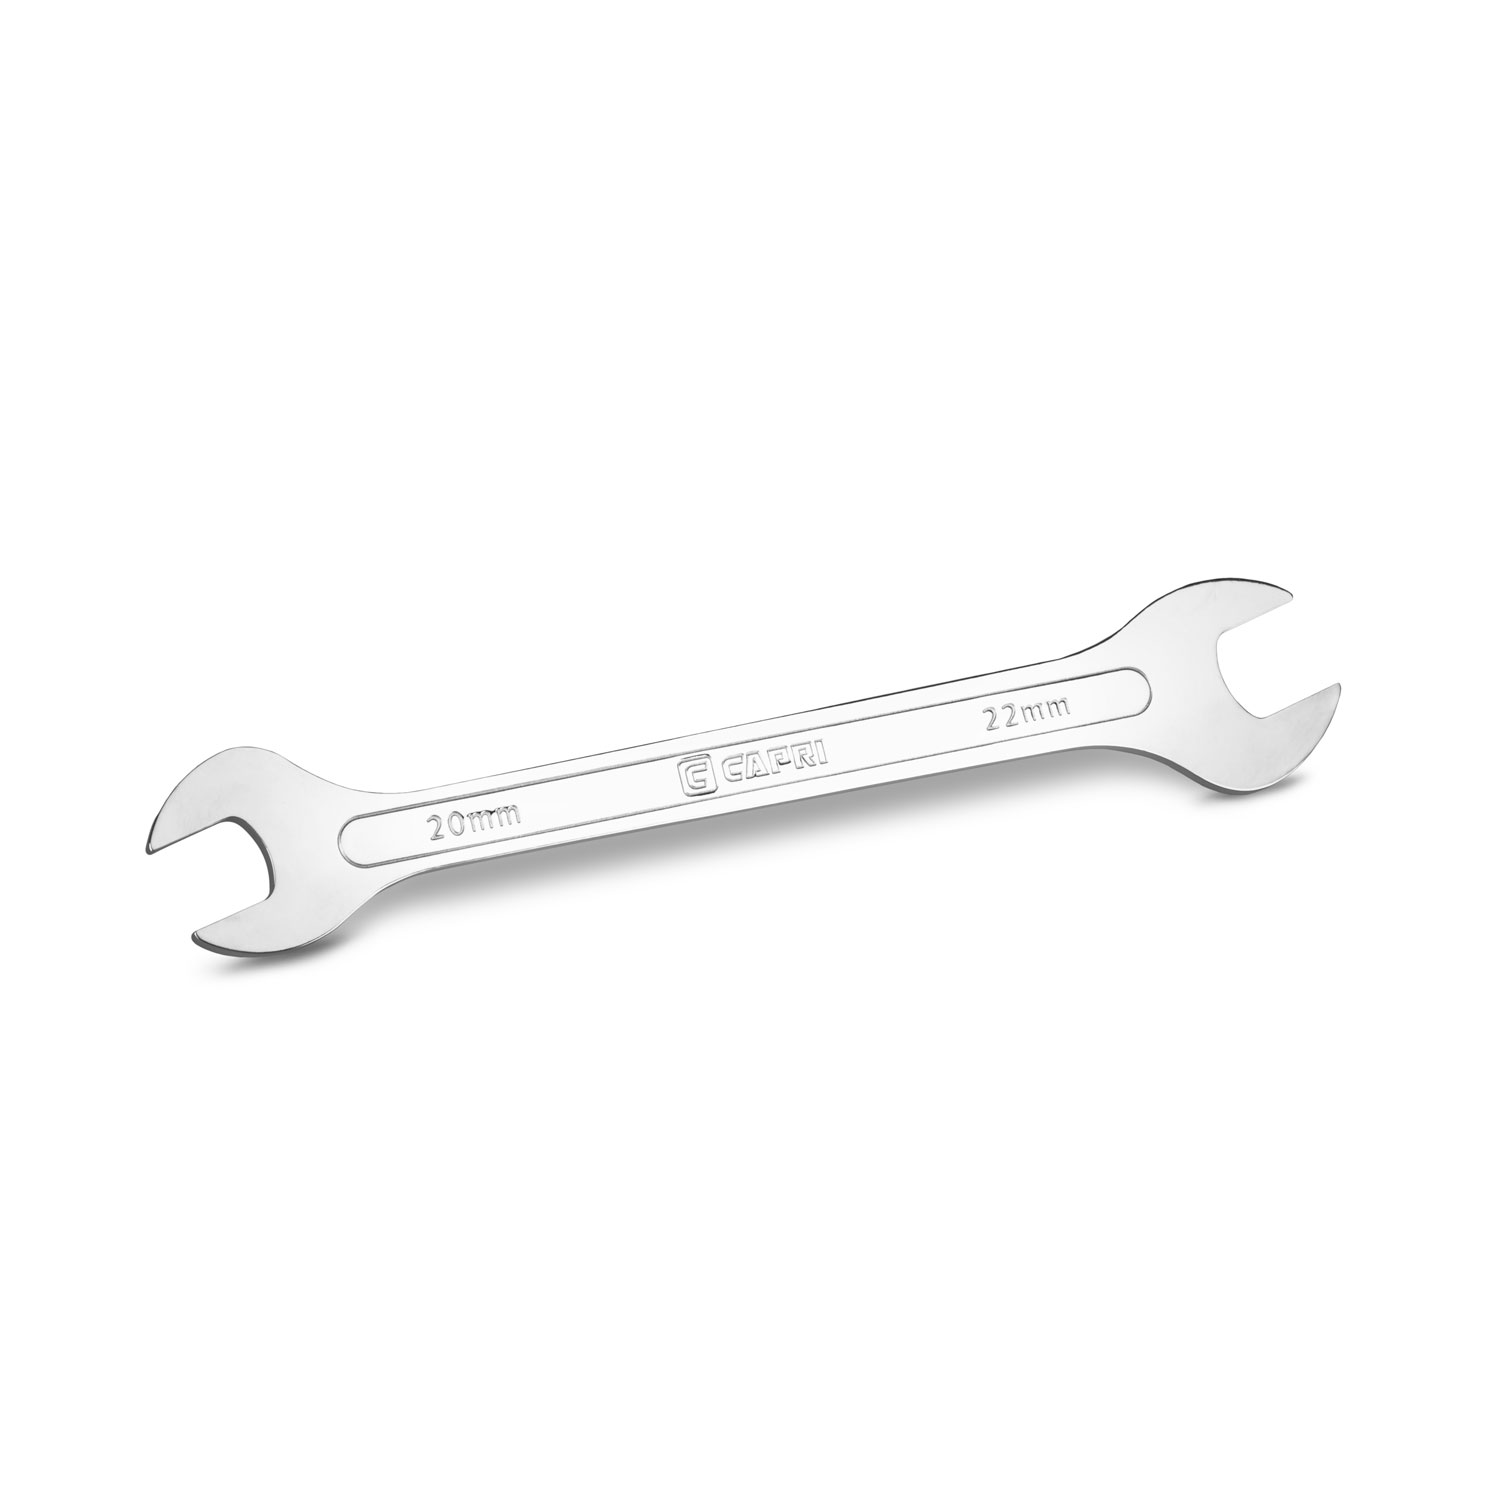 Capri Tools 20 mm x 22 mm Super-Thin Open End Wrench, Metric